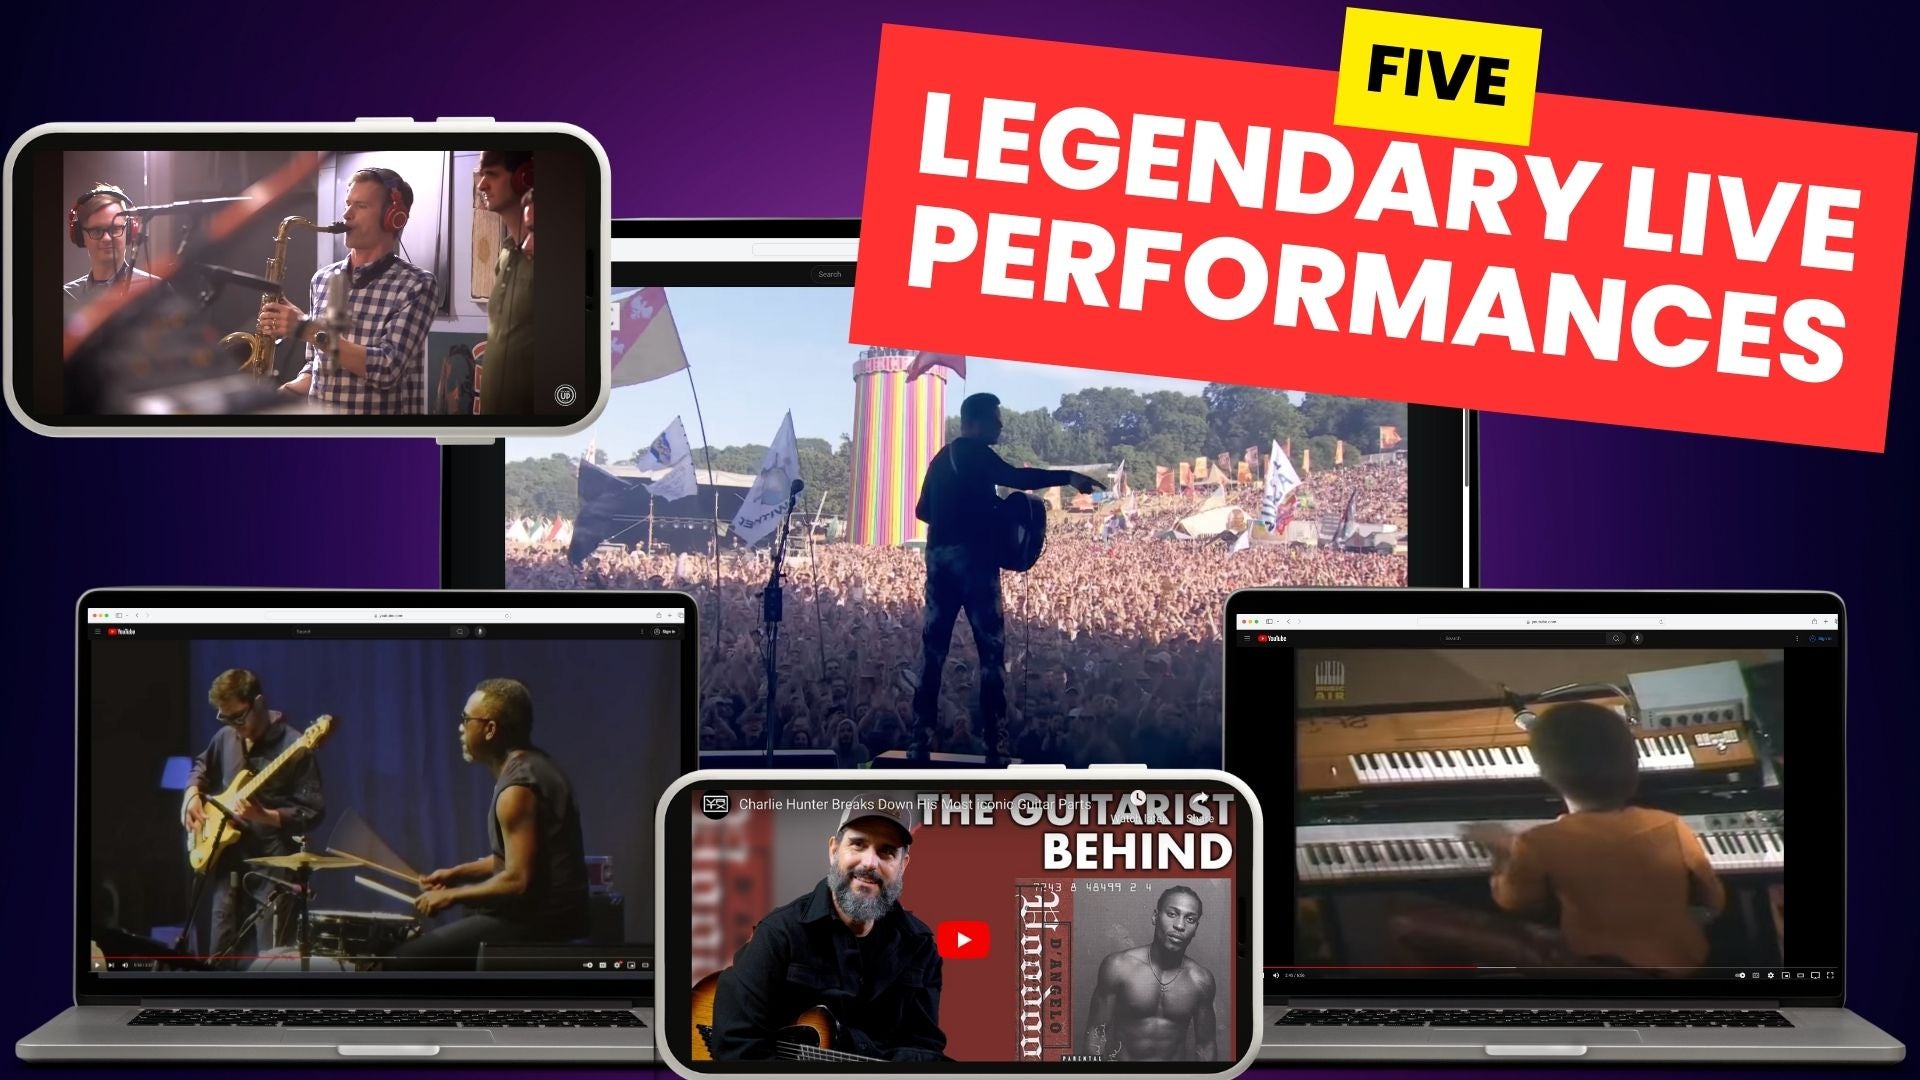 5 Legendary Live Performances feat. Yurt Rock Artists